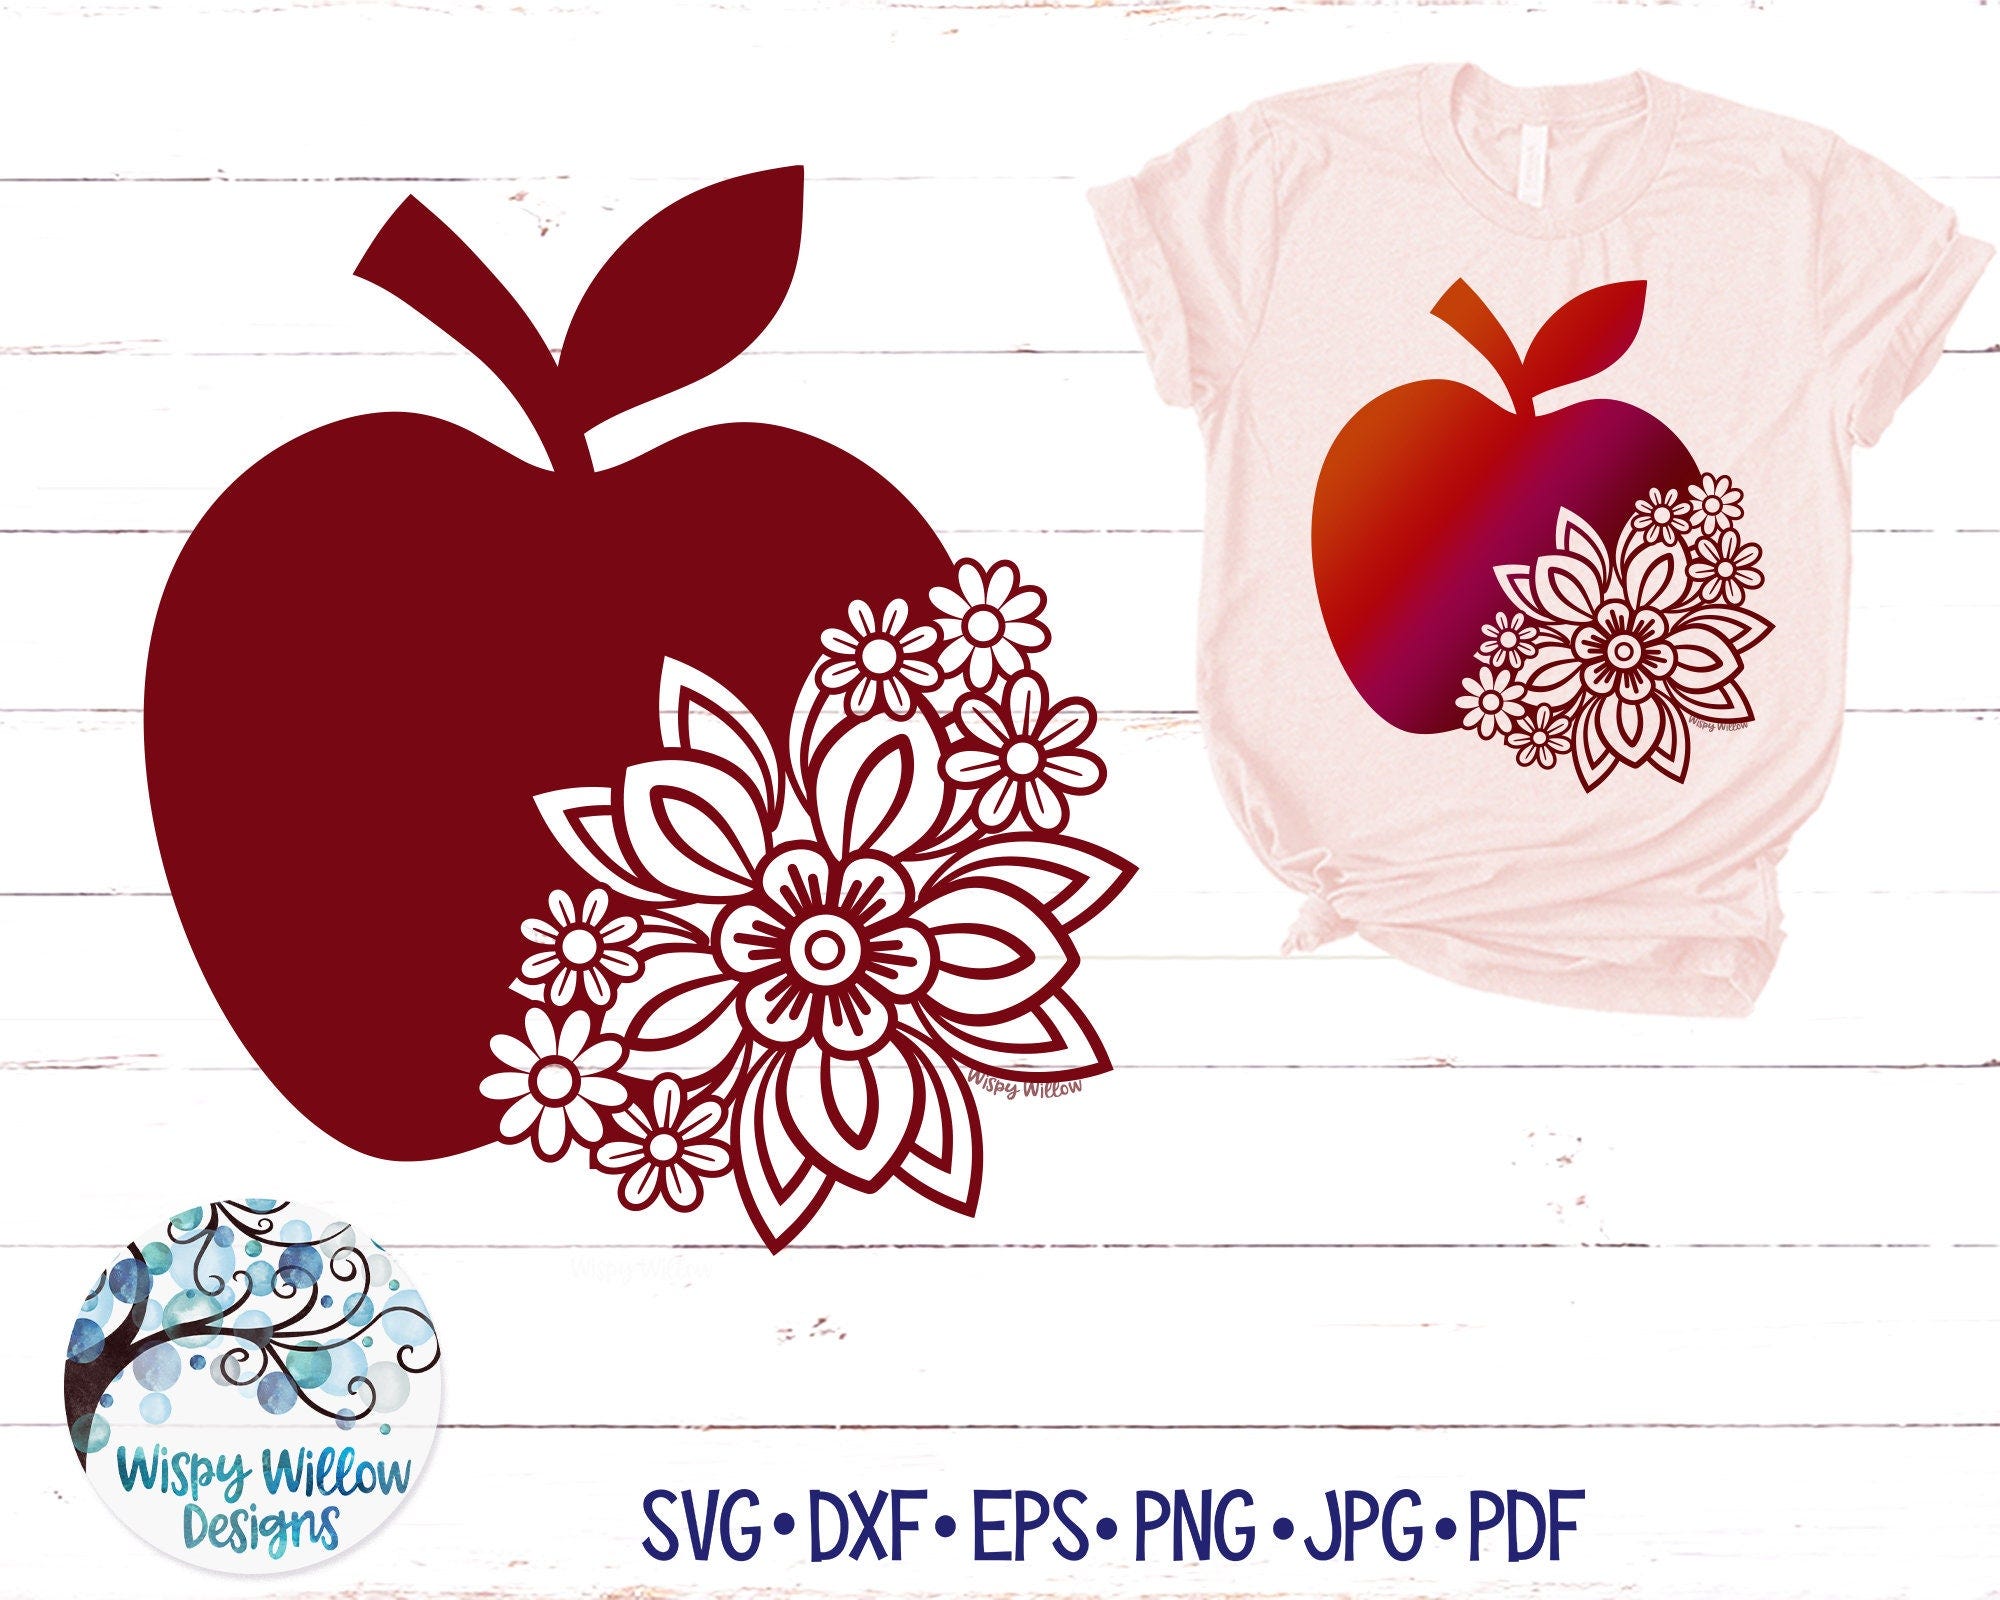 Floral Apple SVG, Apple Mandala Svg, Apple with Flowers SVG, Fall, Autumn, Teacher, School, Pretty Apple, Floral Apple Vinyl Decal File SVG